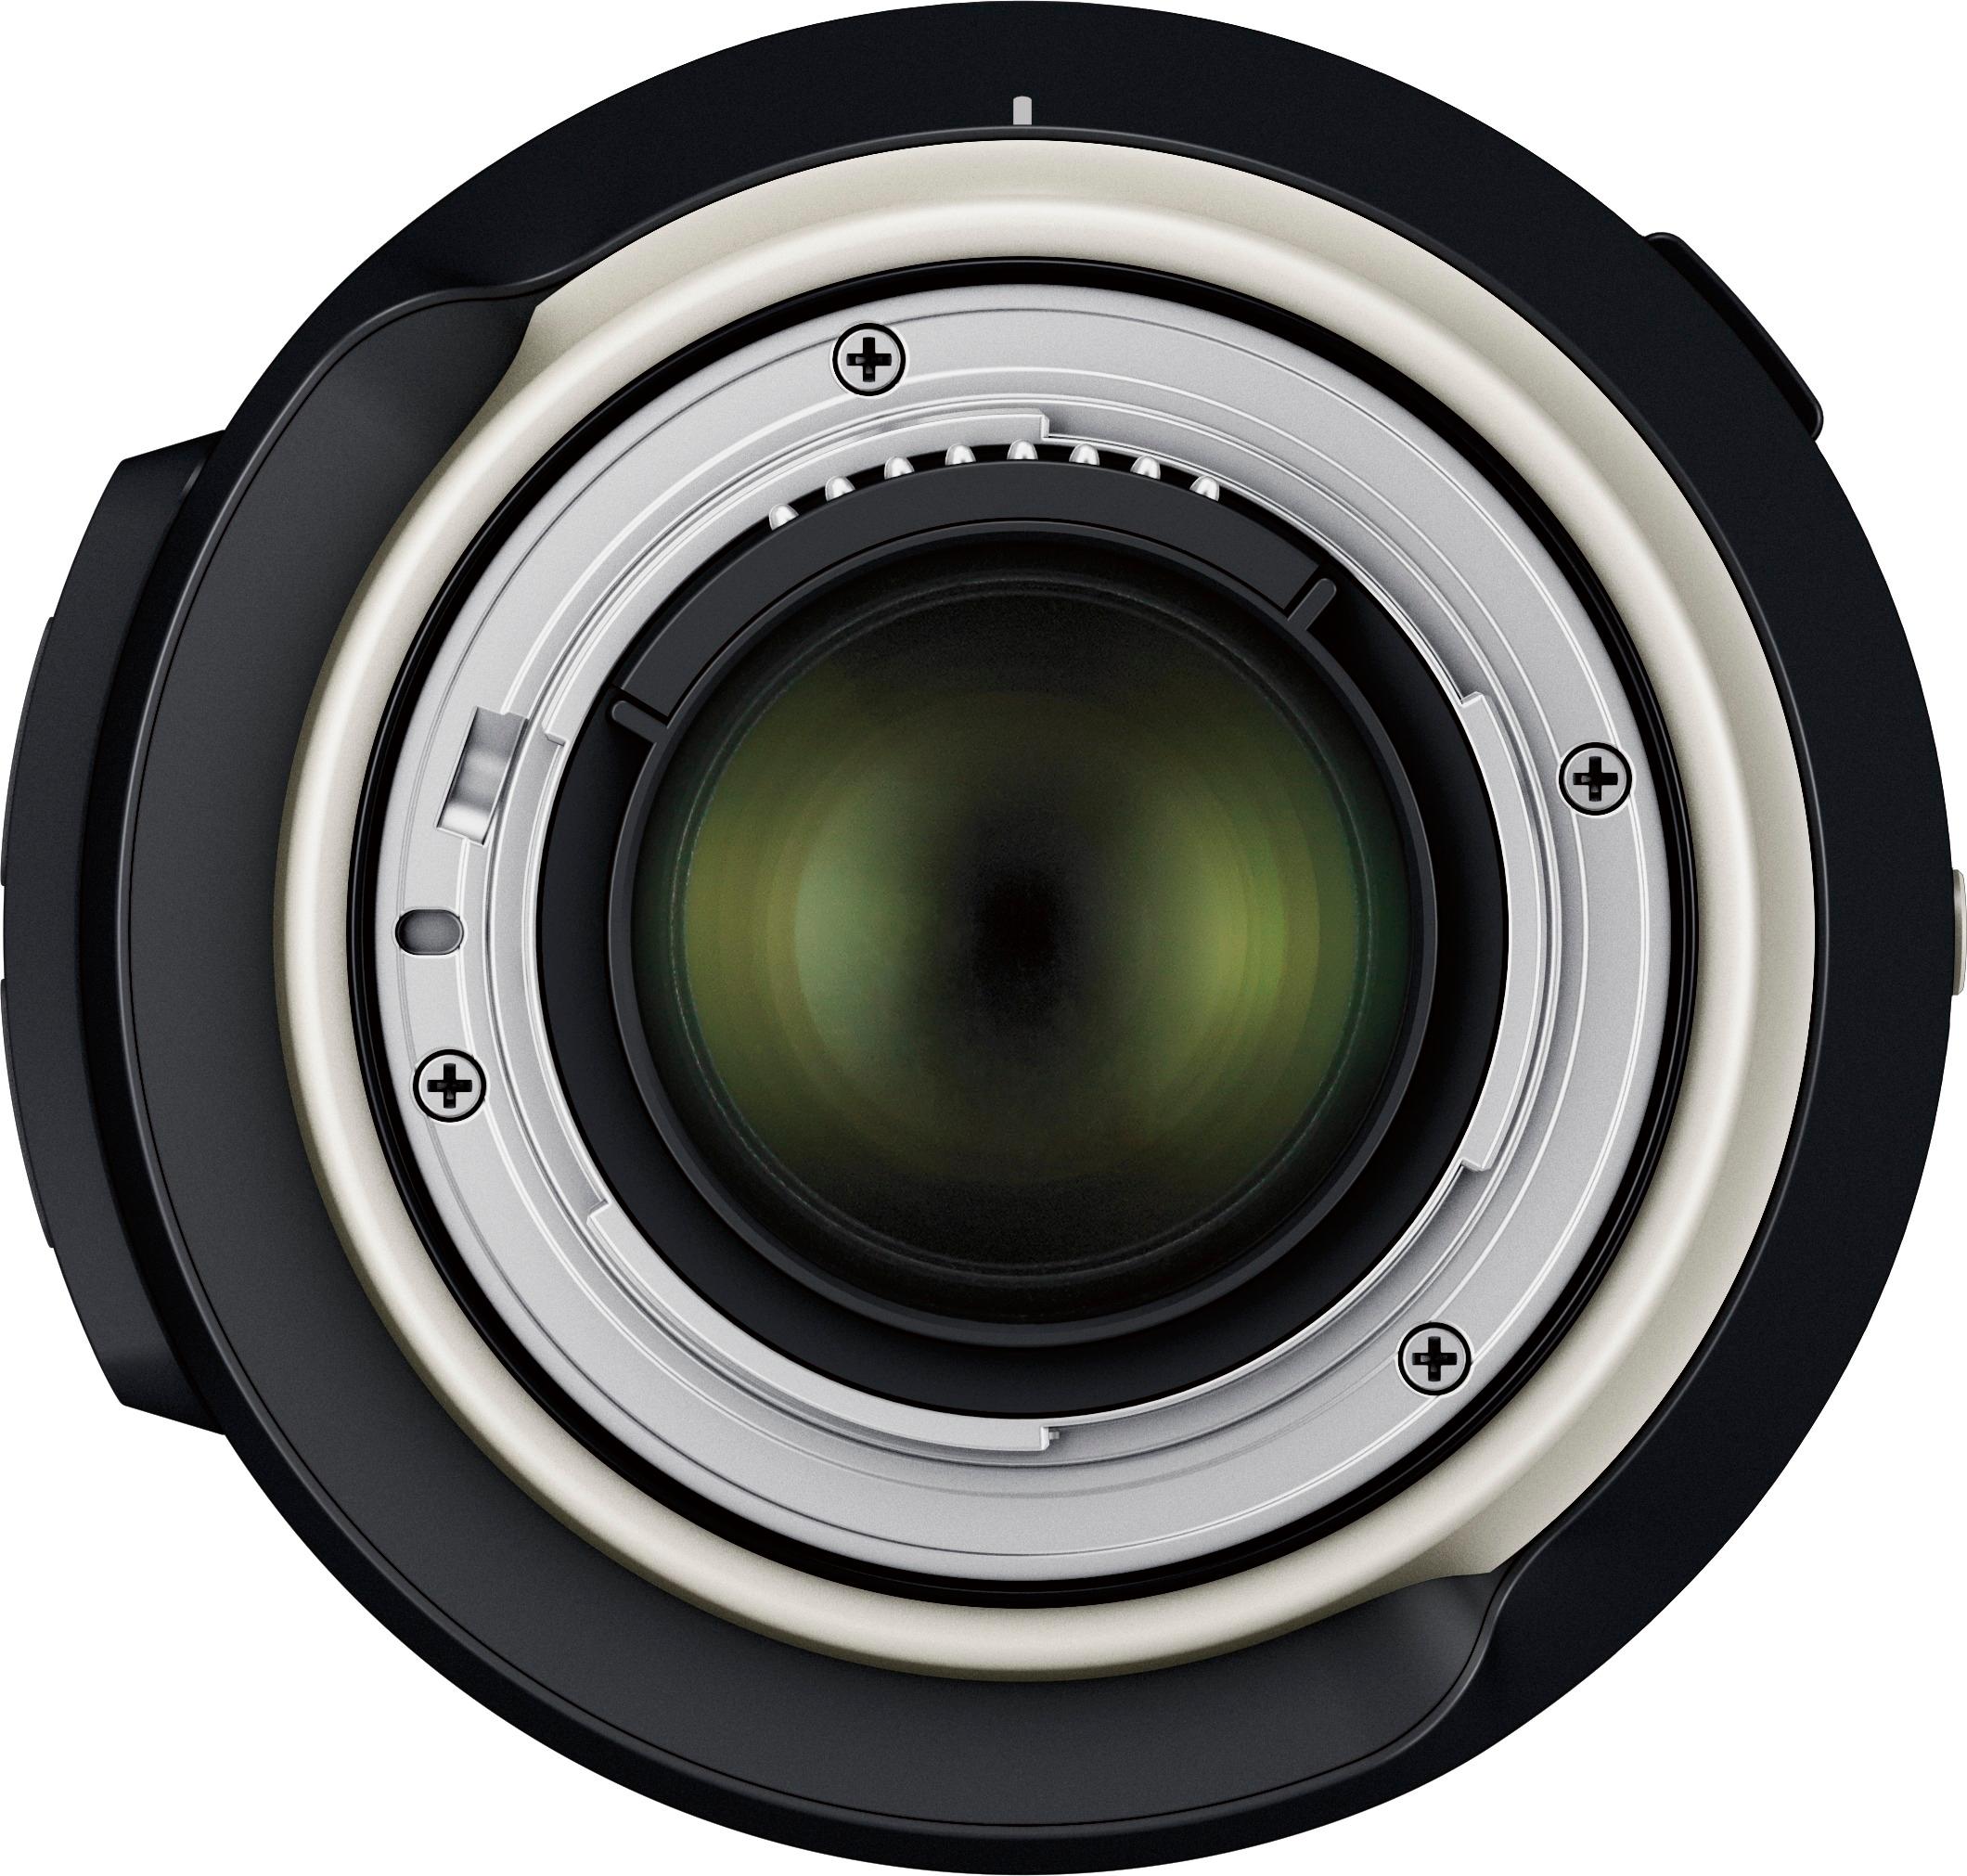 Tamron SP 24-70mm F/2.8 Di VC USD G2 Zoom Lens for Nikon DSLR 